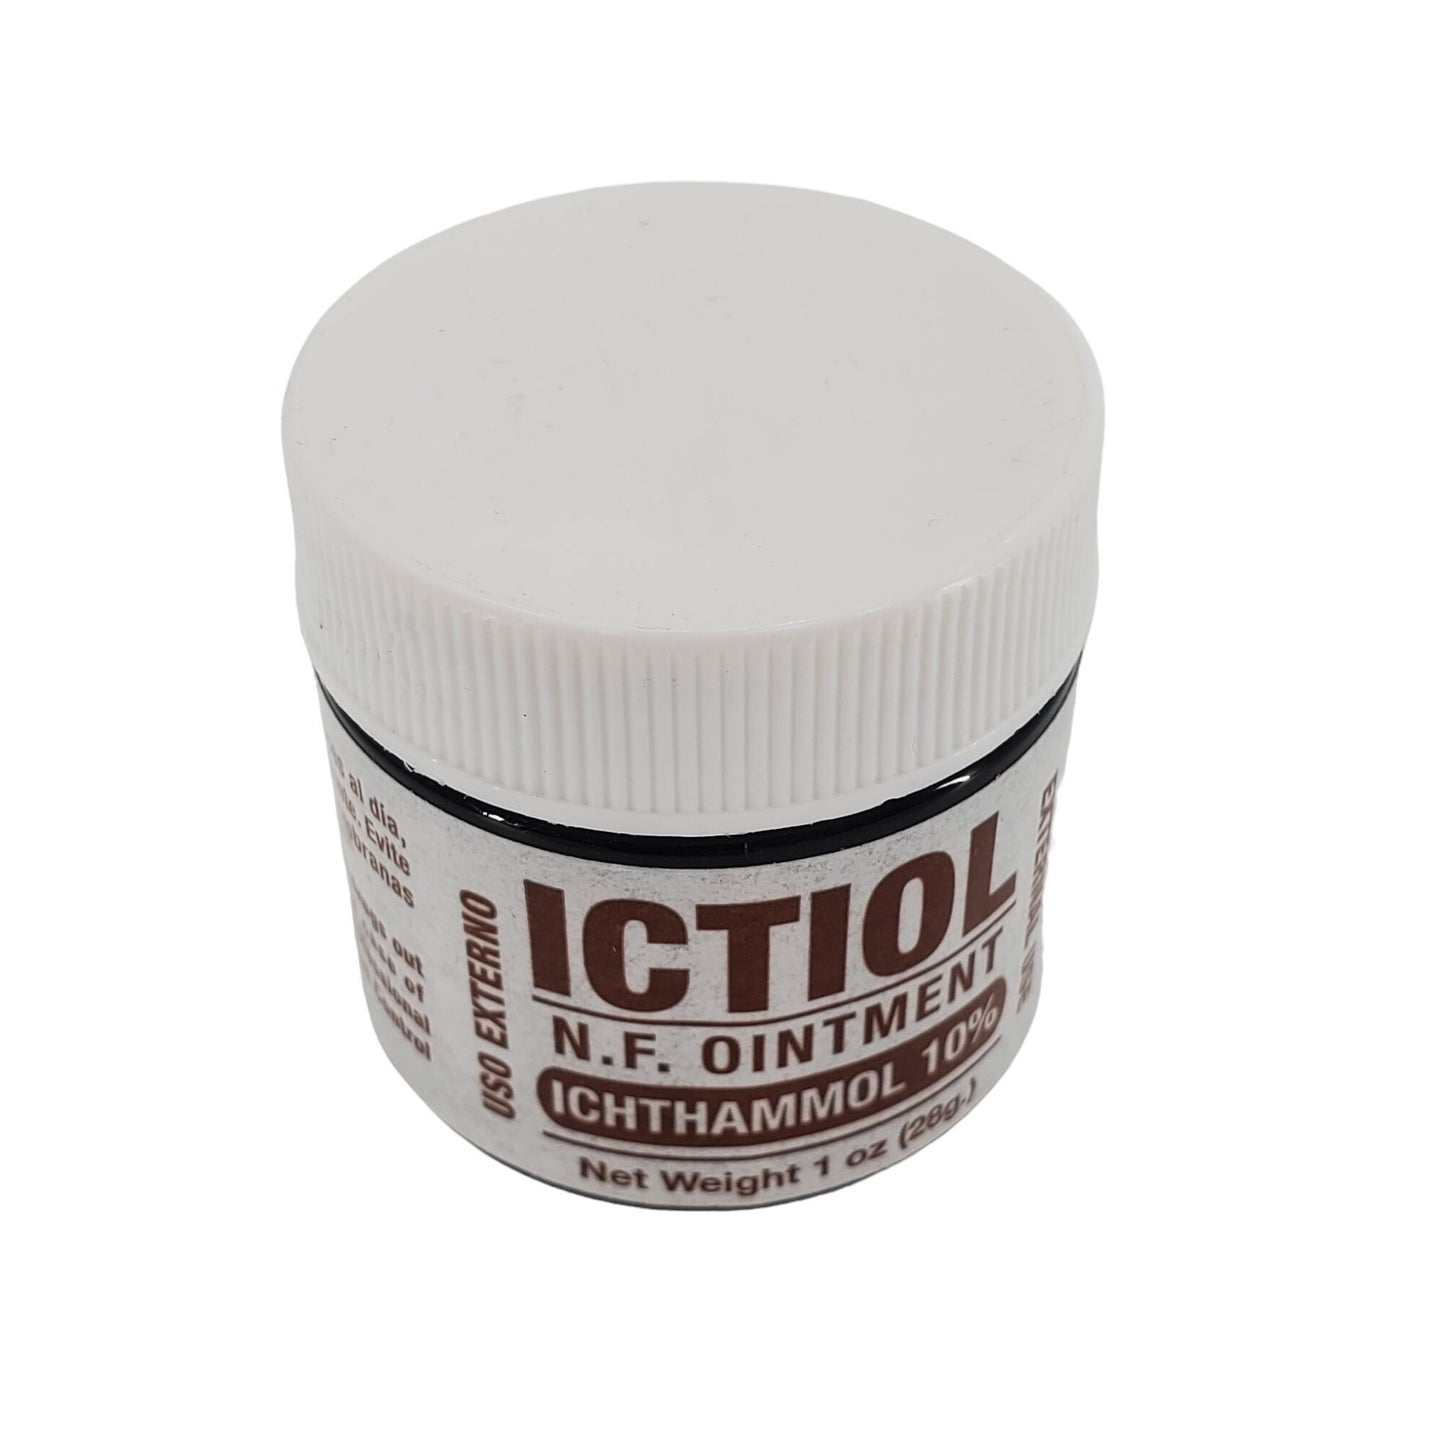 Ichthammol Ointment ICTIOL Ichthammol 10% concentration 1oz container